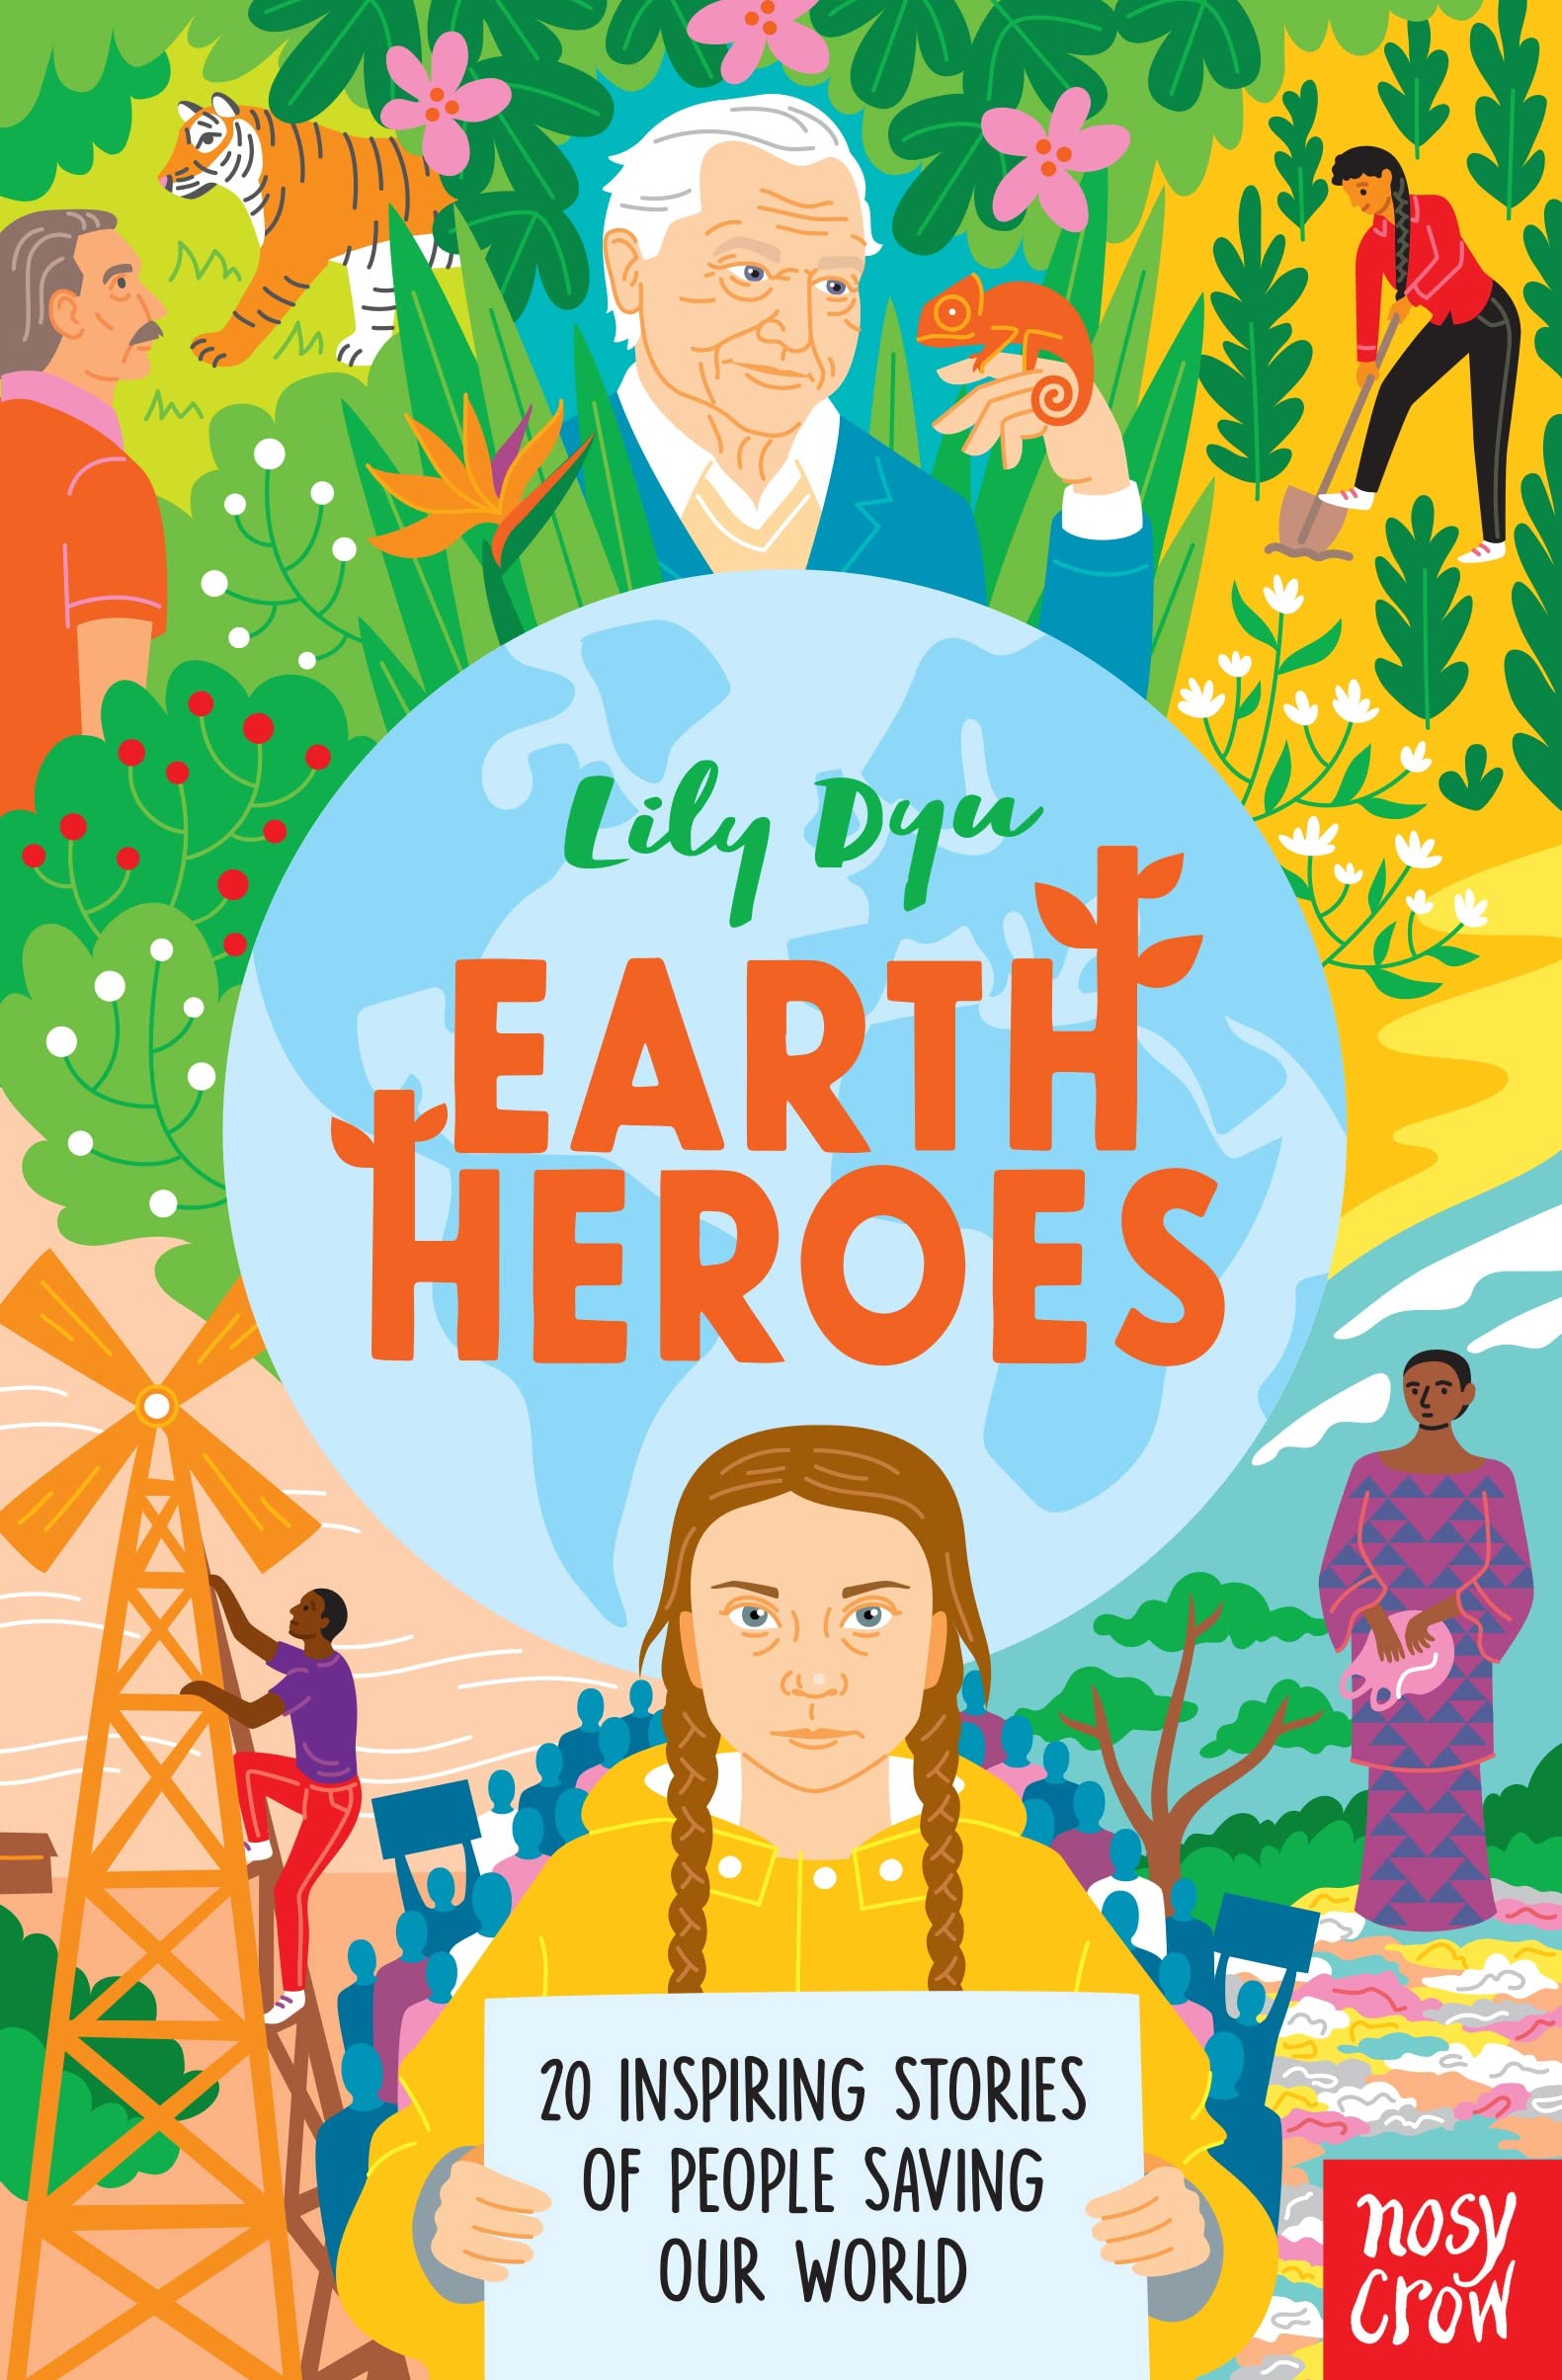 EARTH HEROES : TWENTY INSPIRING STORIES OF PEOPLE SAVING OUR WORLD HC